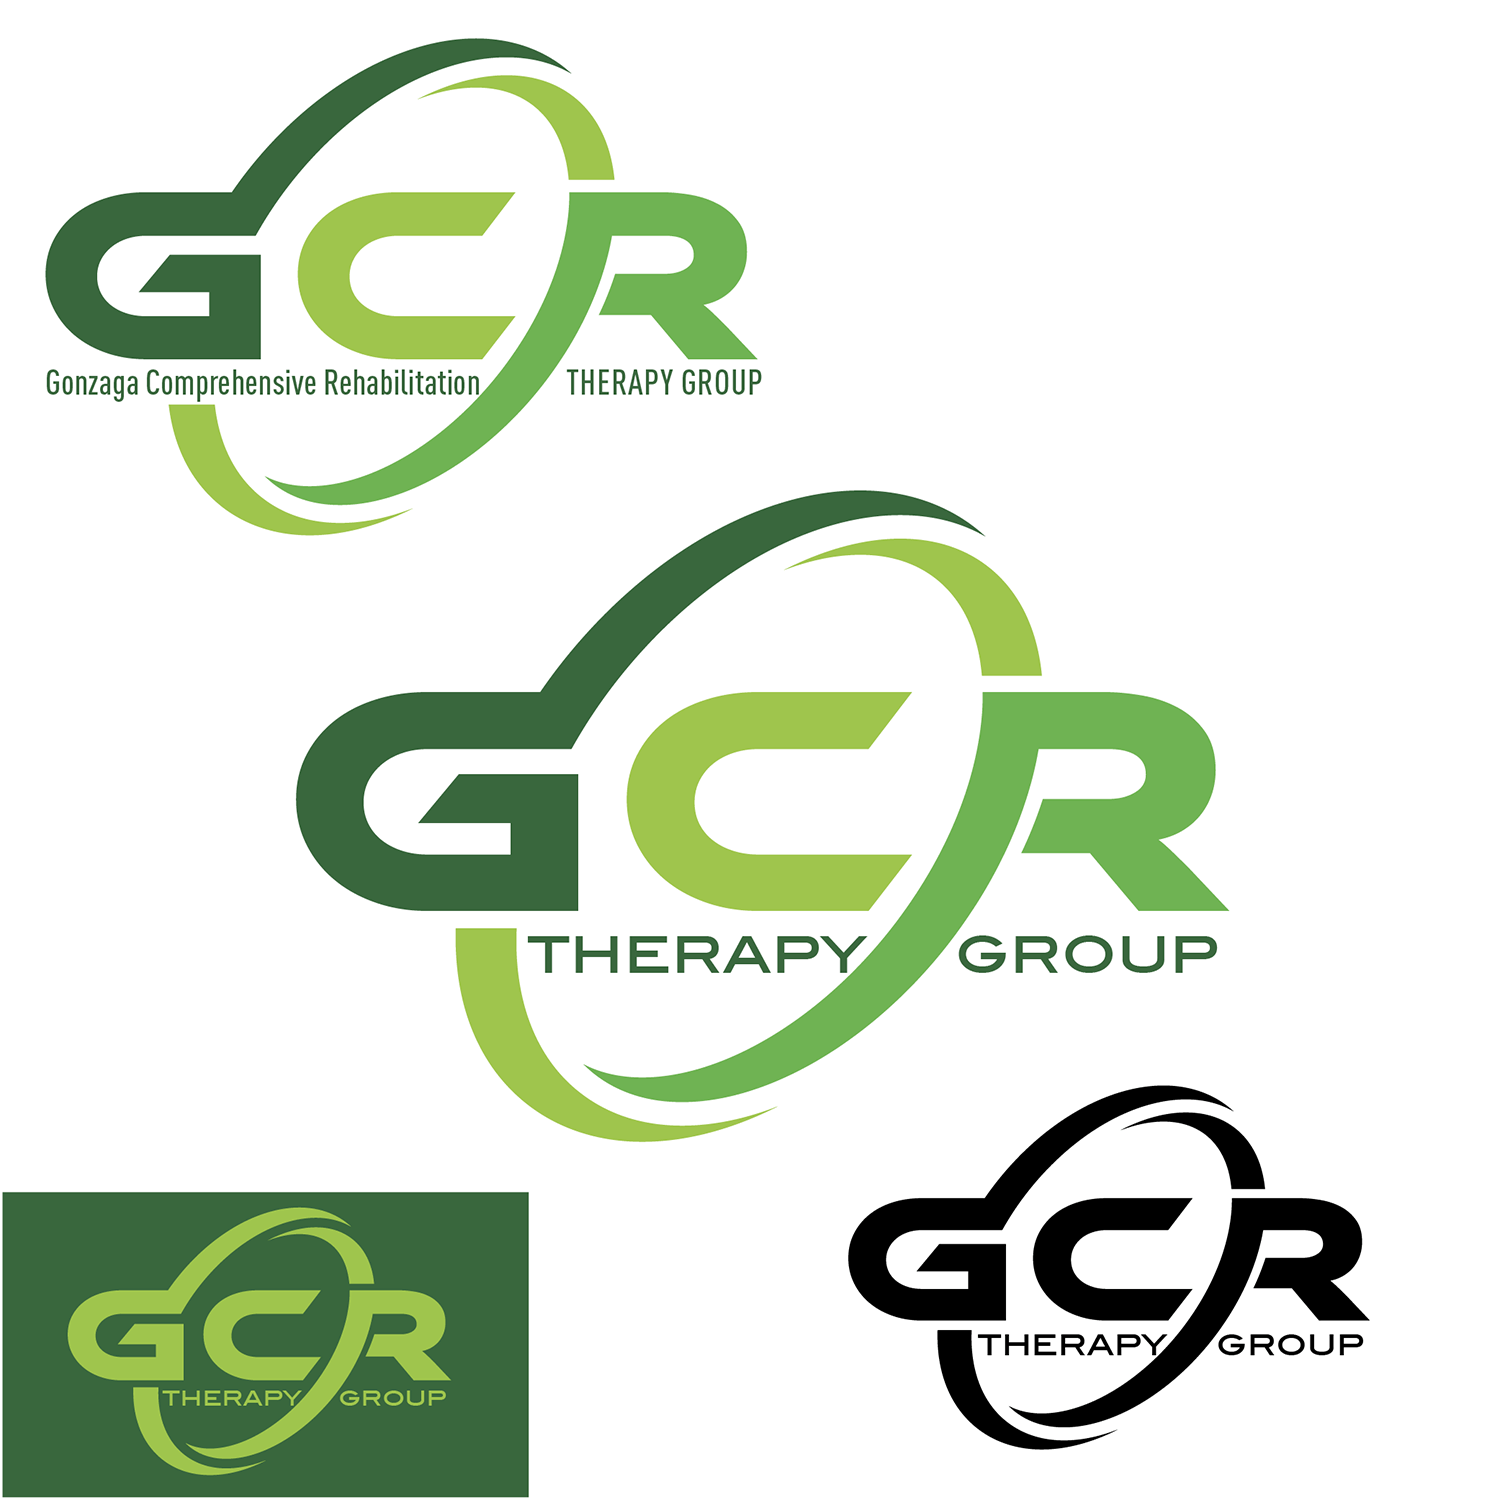 GCR Logo - Modern, Professional, Rehabilitation Center Logo Design for GCR or